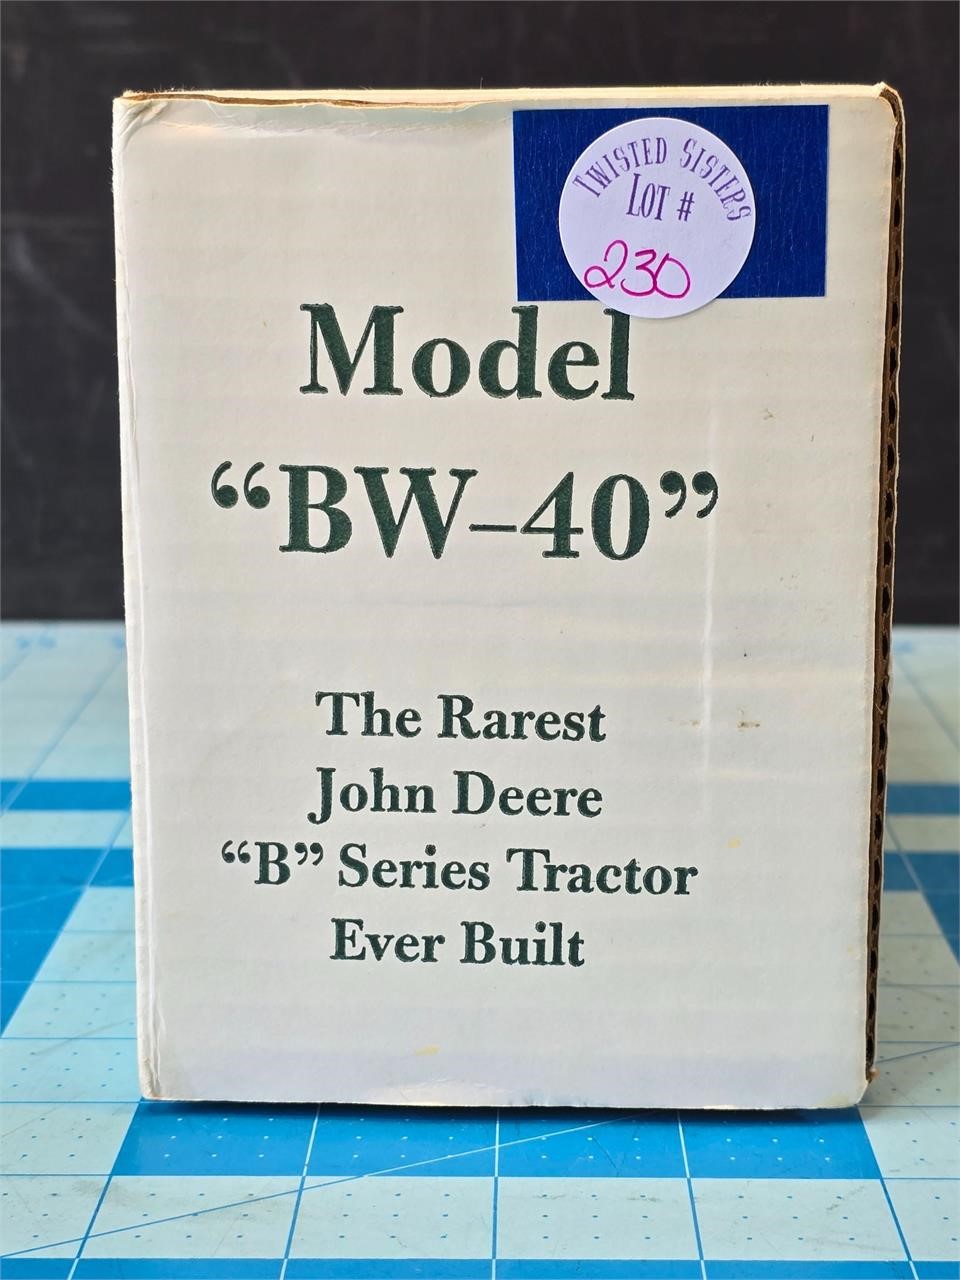 John Deere Model "BW-40" 2 cyl 6 replica tractor